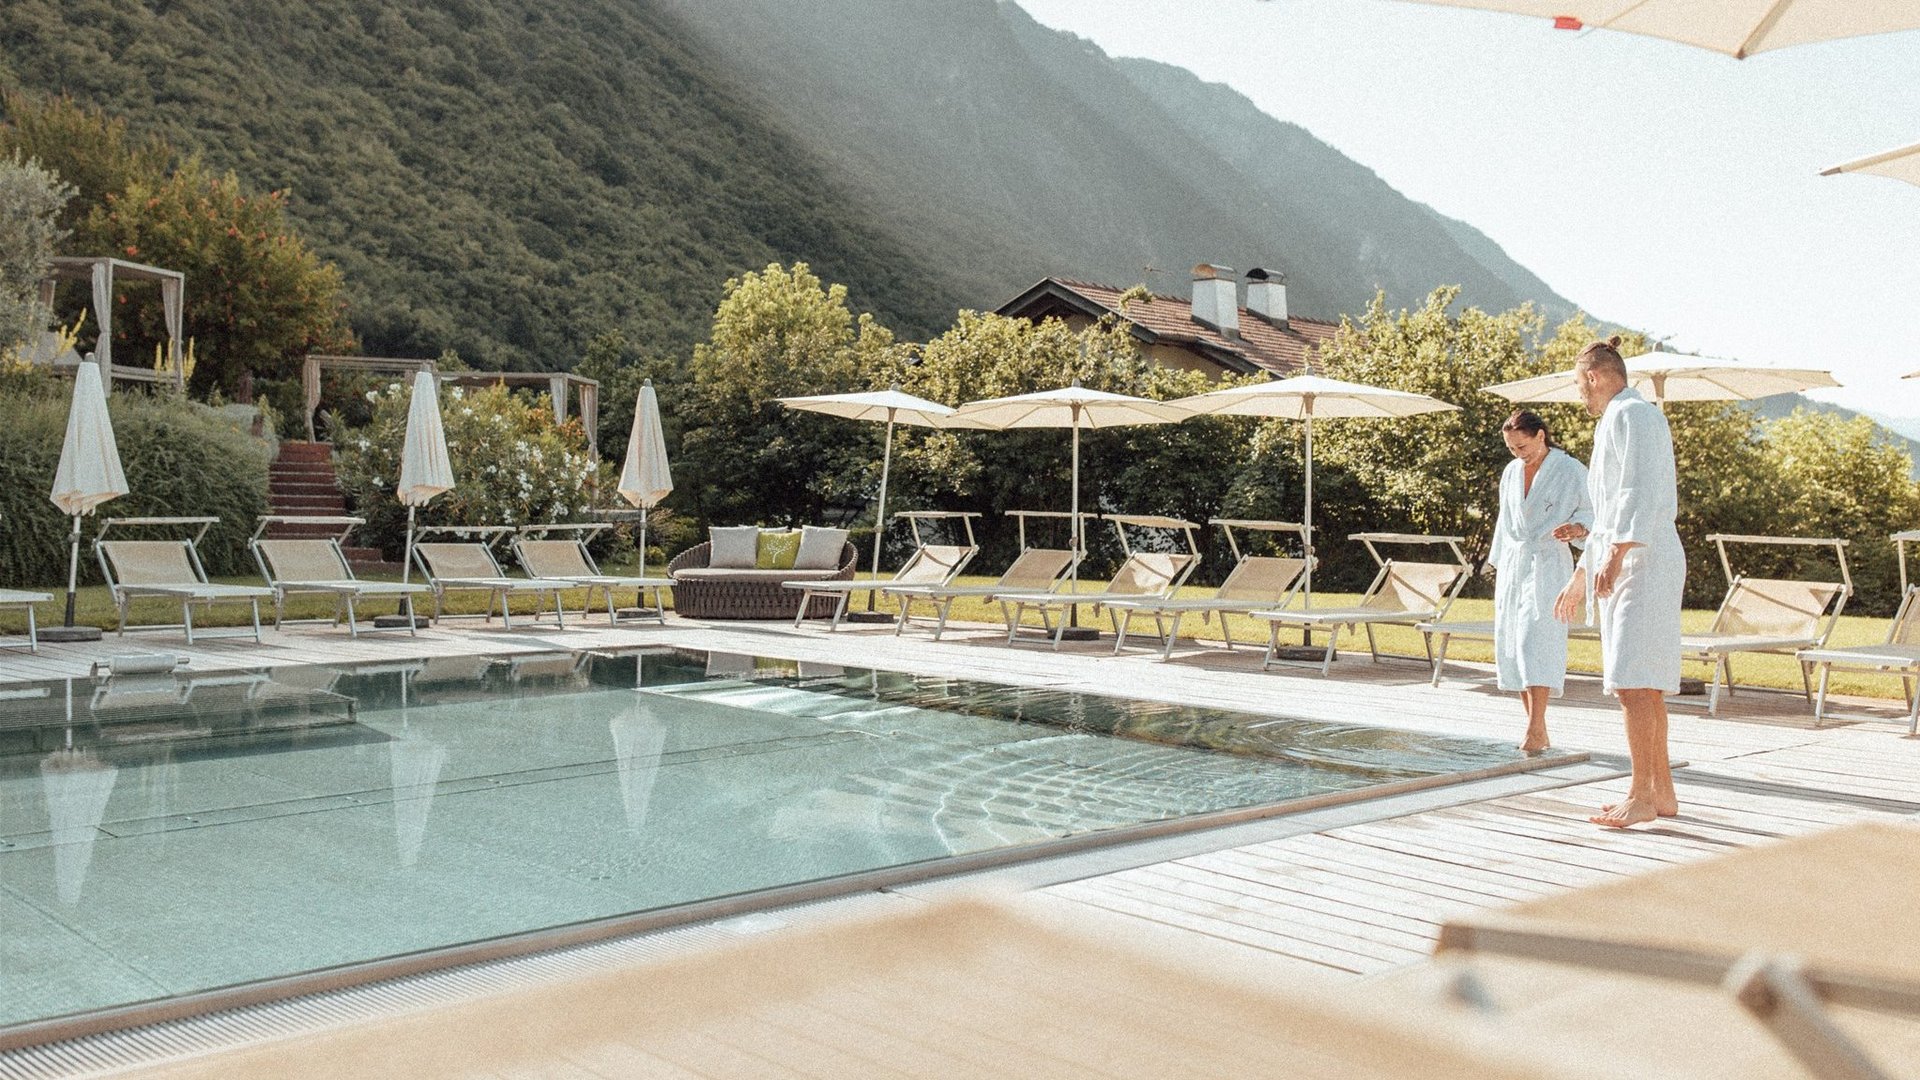 The organic wellness hotel in South Tyrol: theiner’s garten